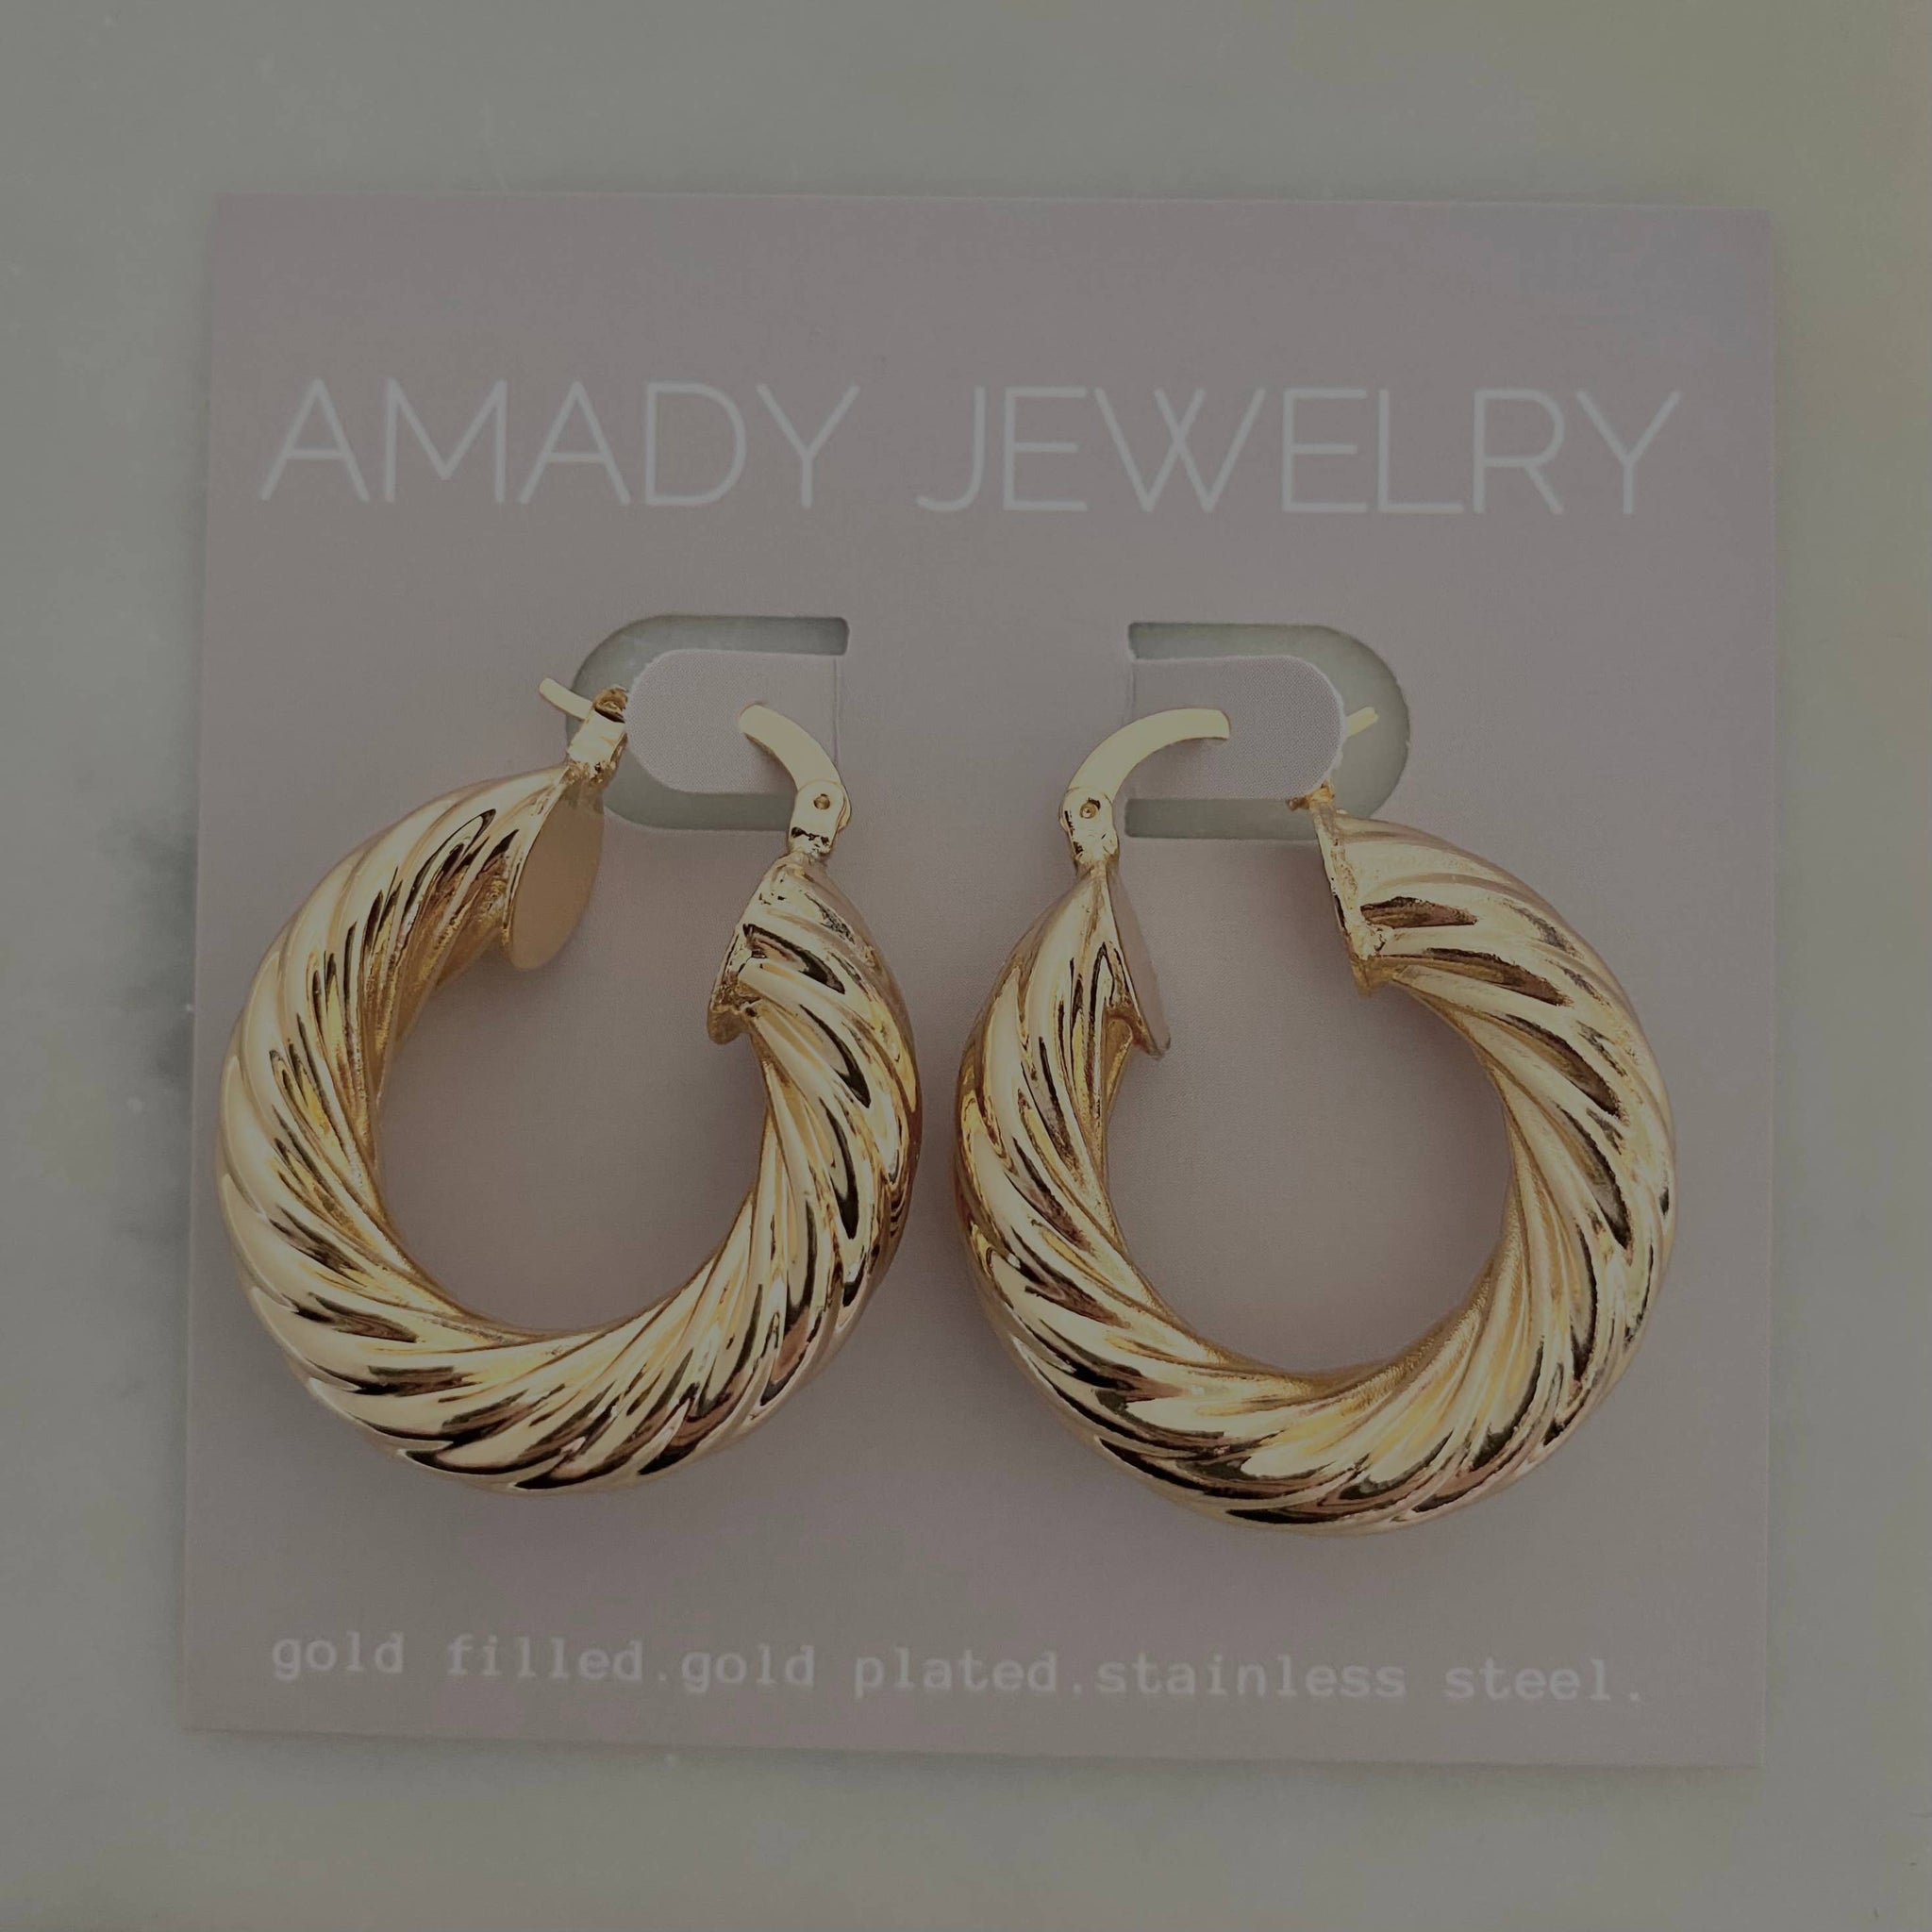 18k Gold Filled Thick Hoop Earrings